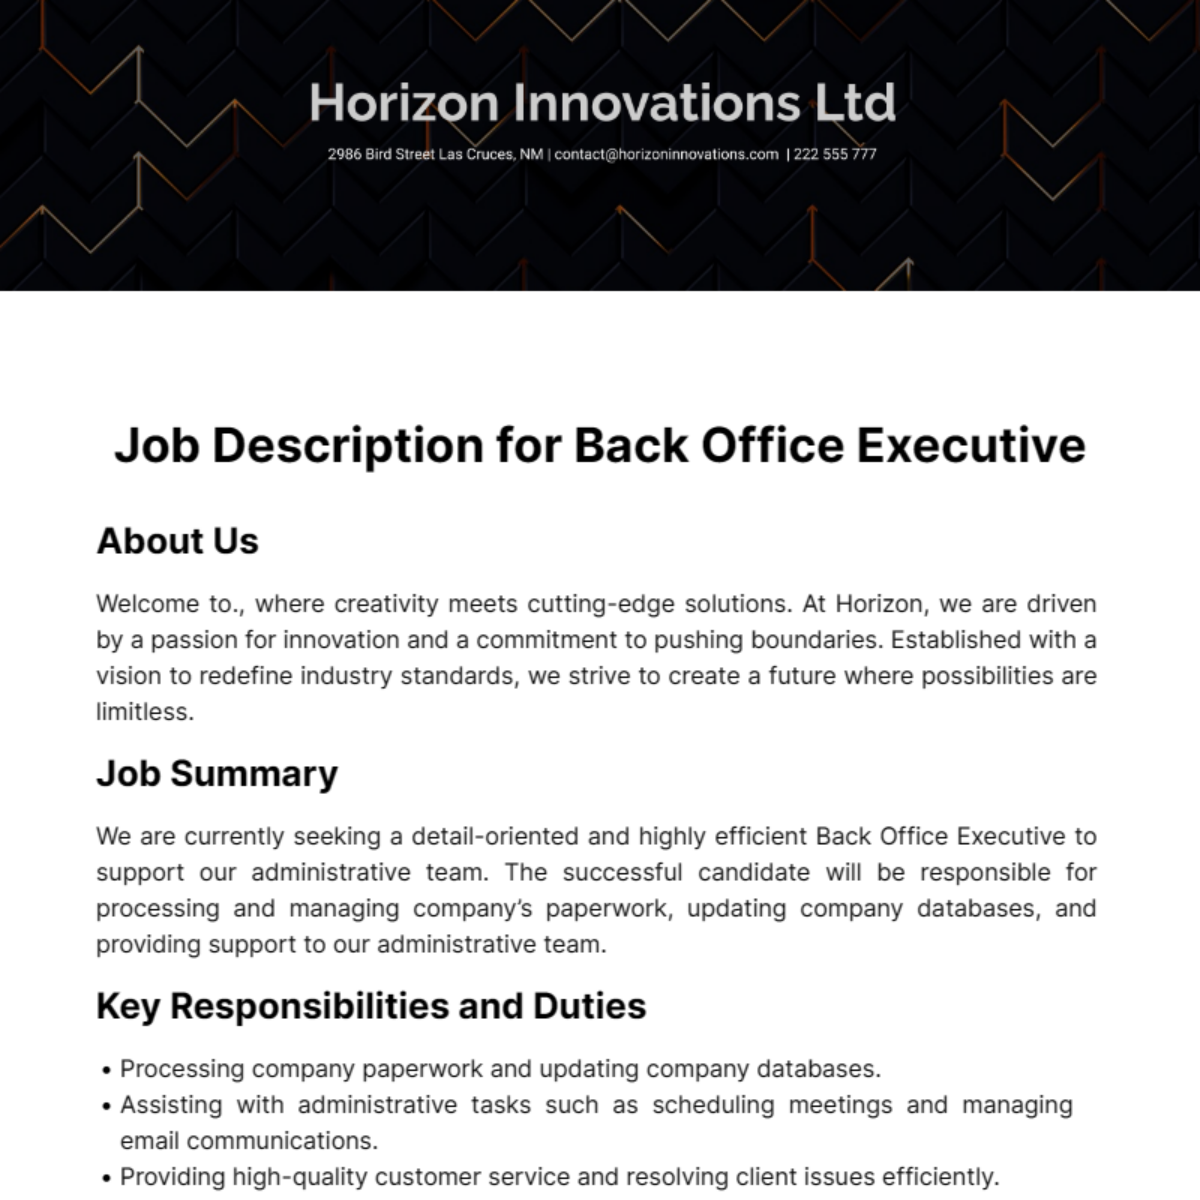 Job Description for Back Office Executive Template